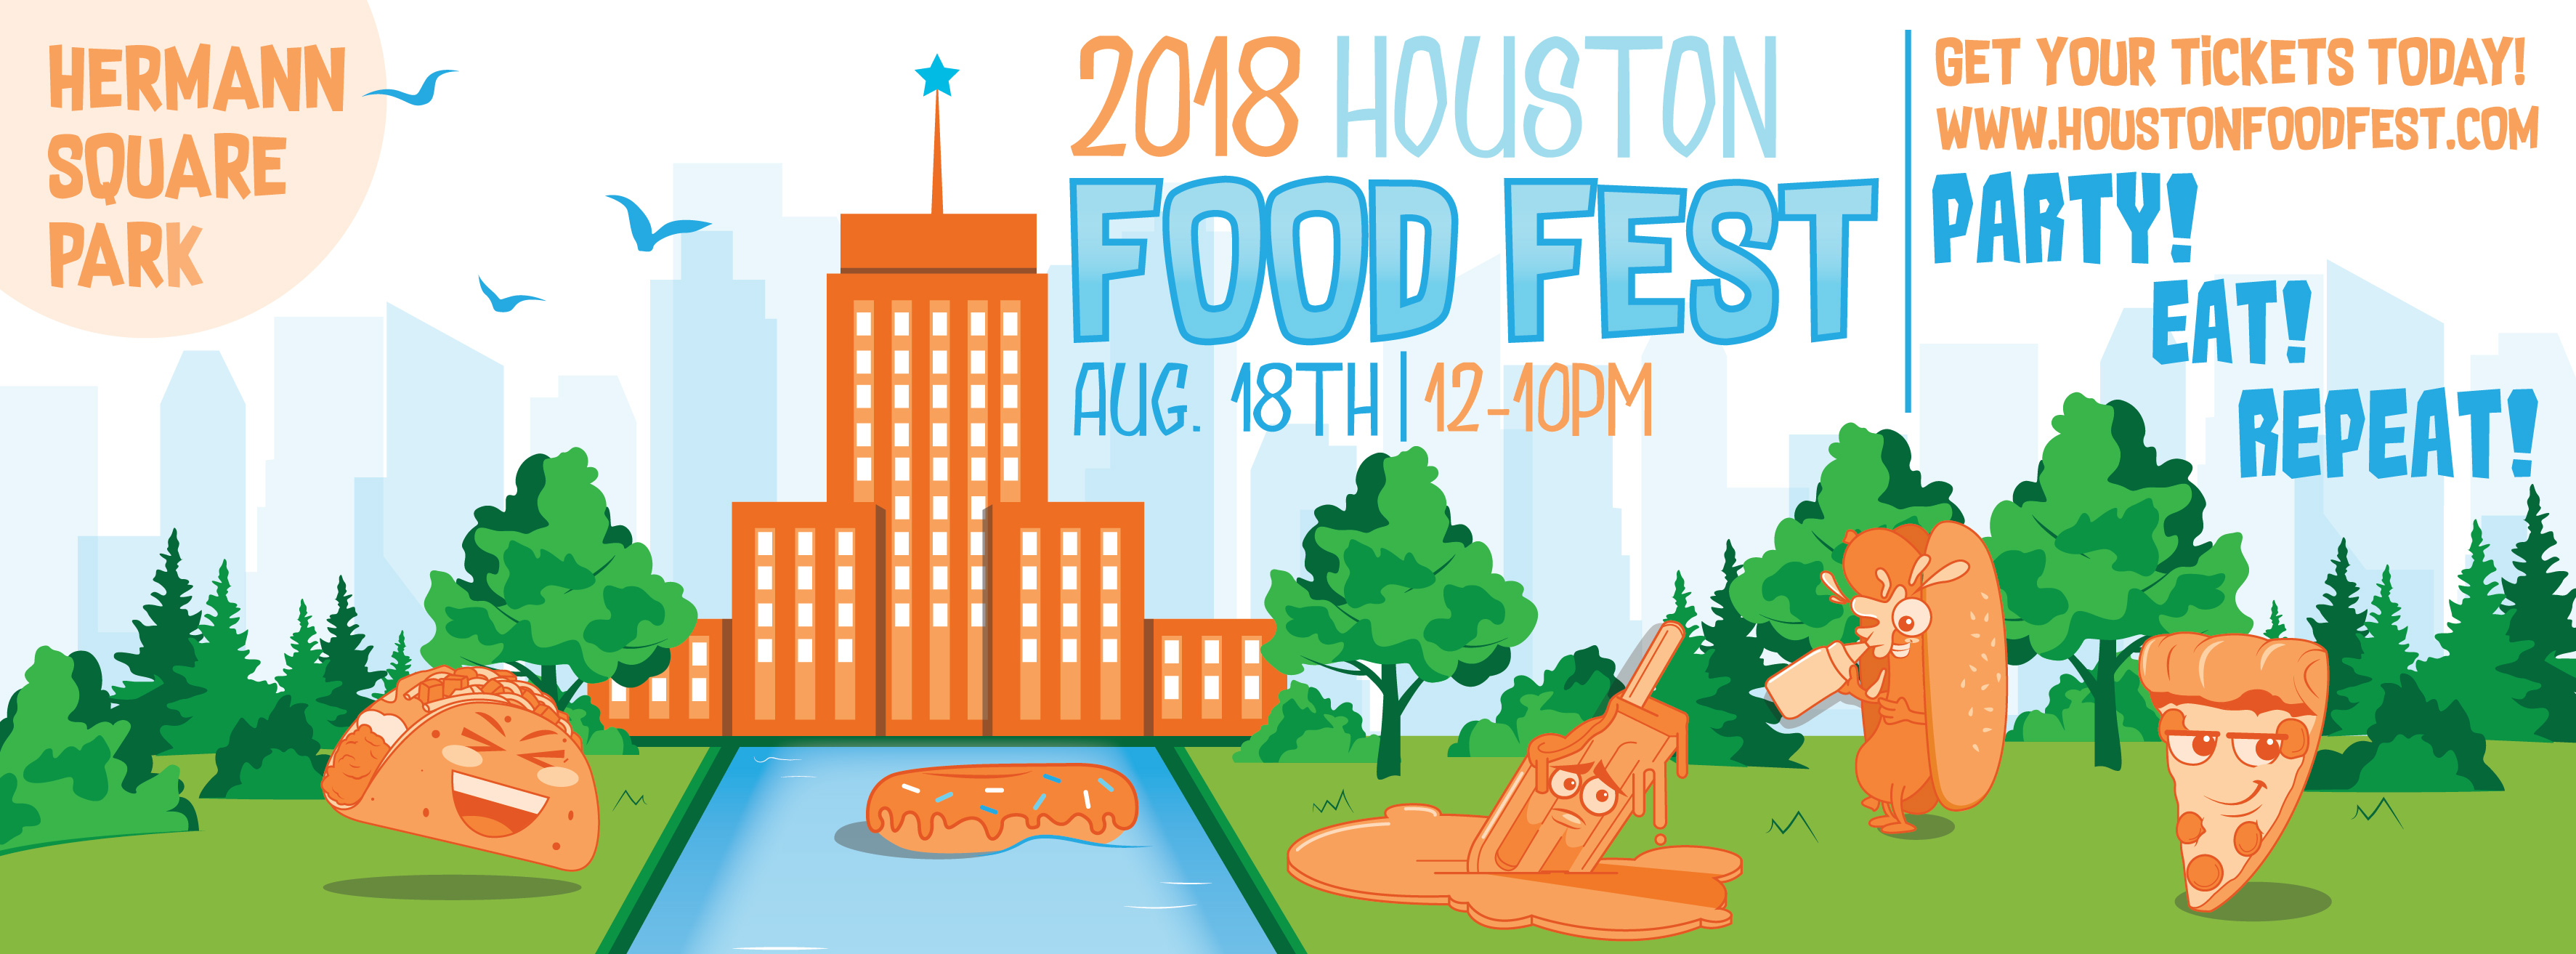 Houston's Largest Food Fest Returns Food, Fun, Music & More Houston